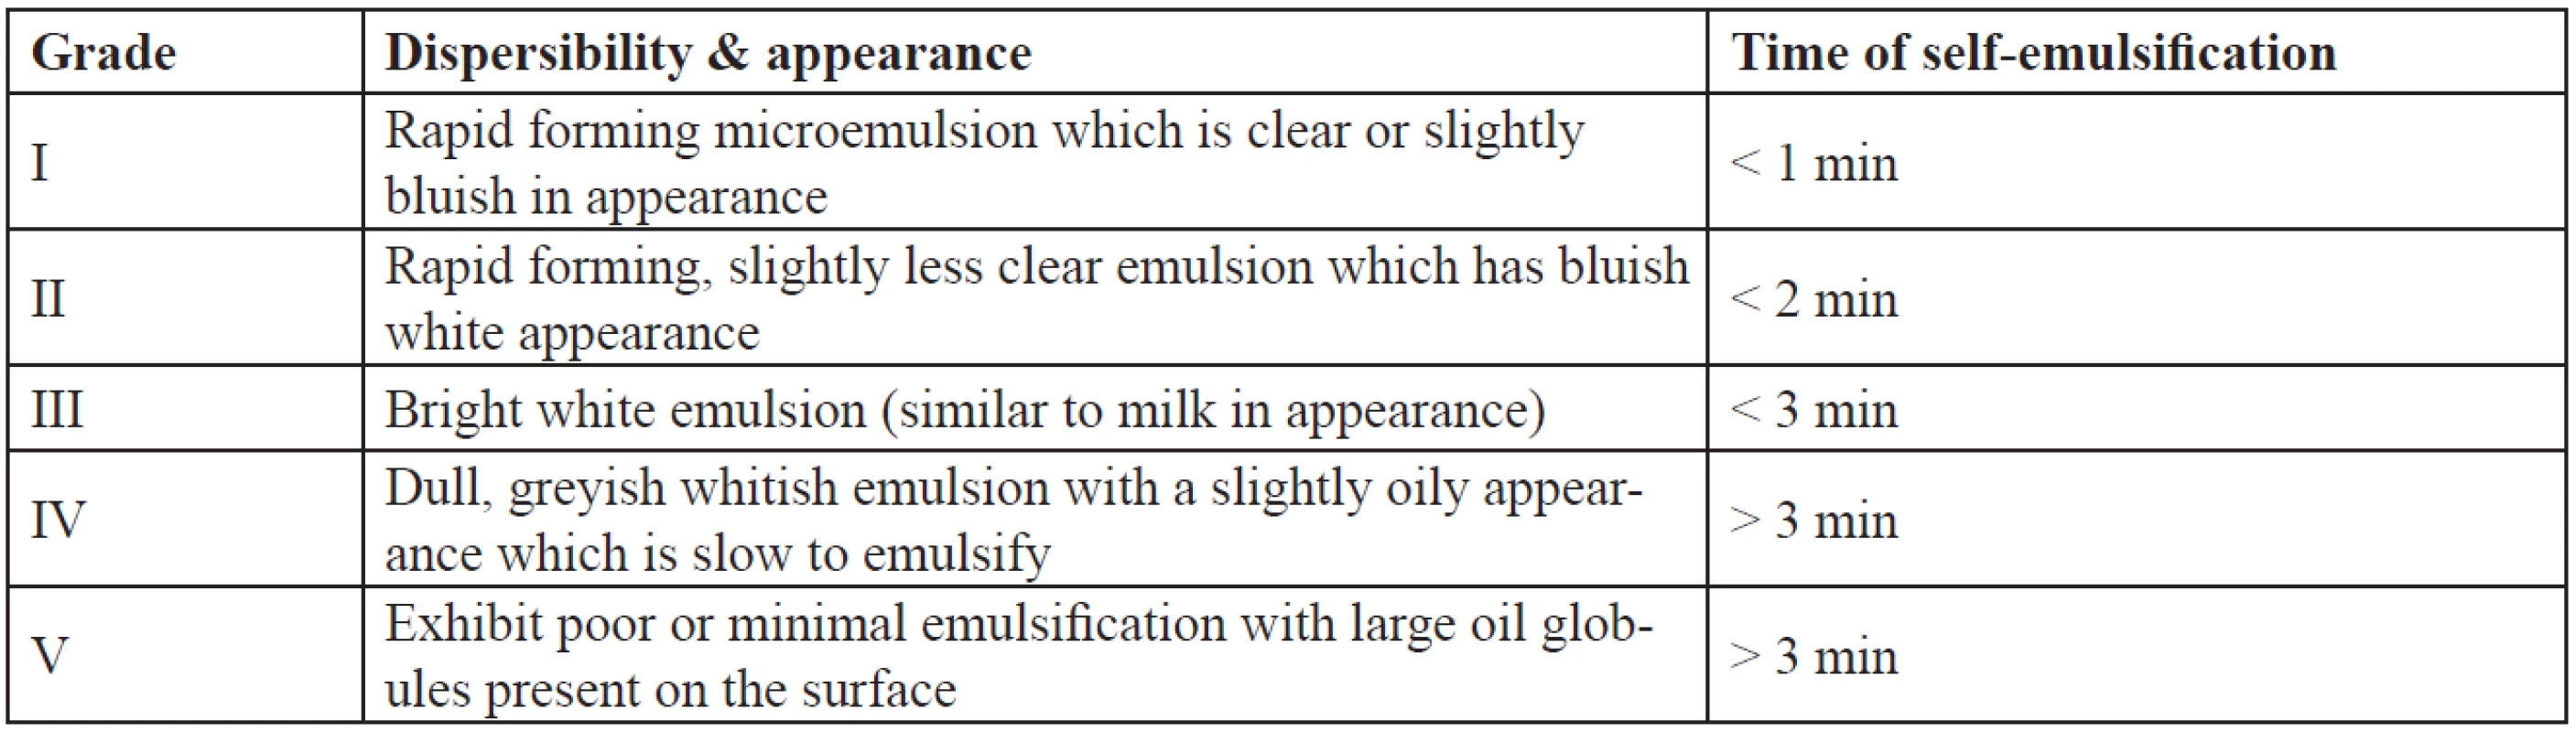 Visual assessment of efficiency of self-emulsification